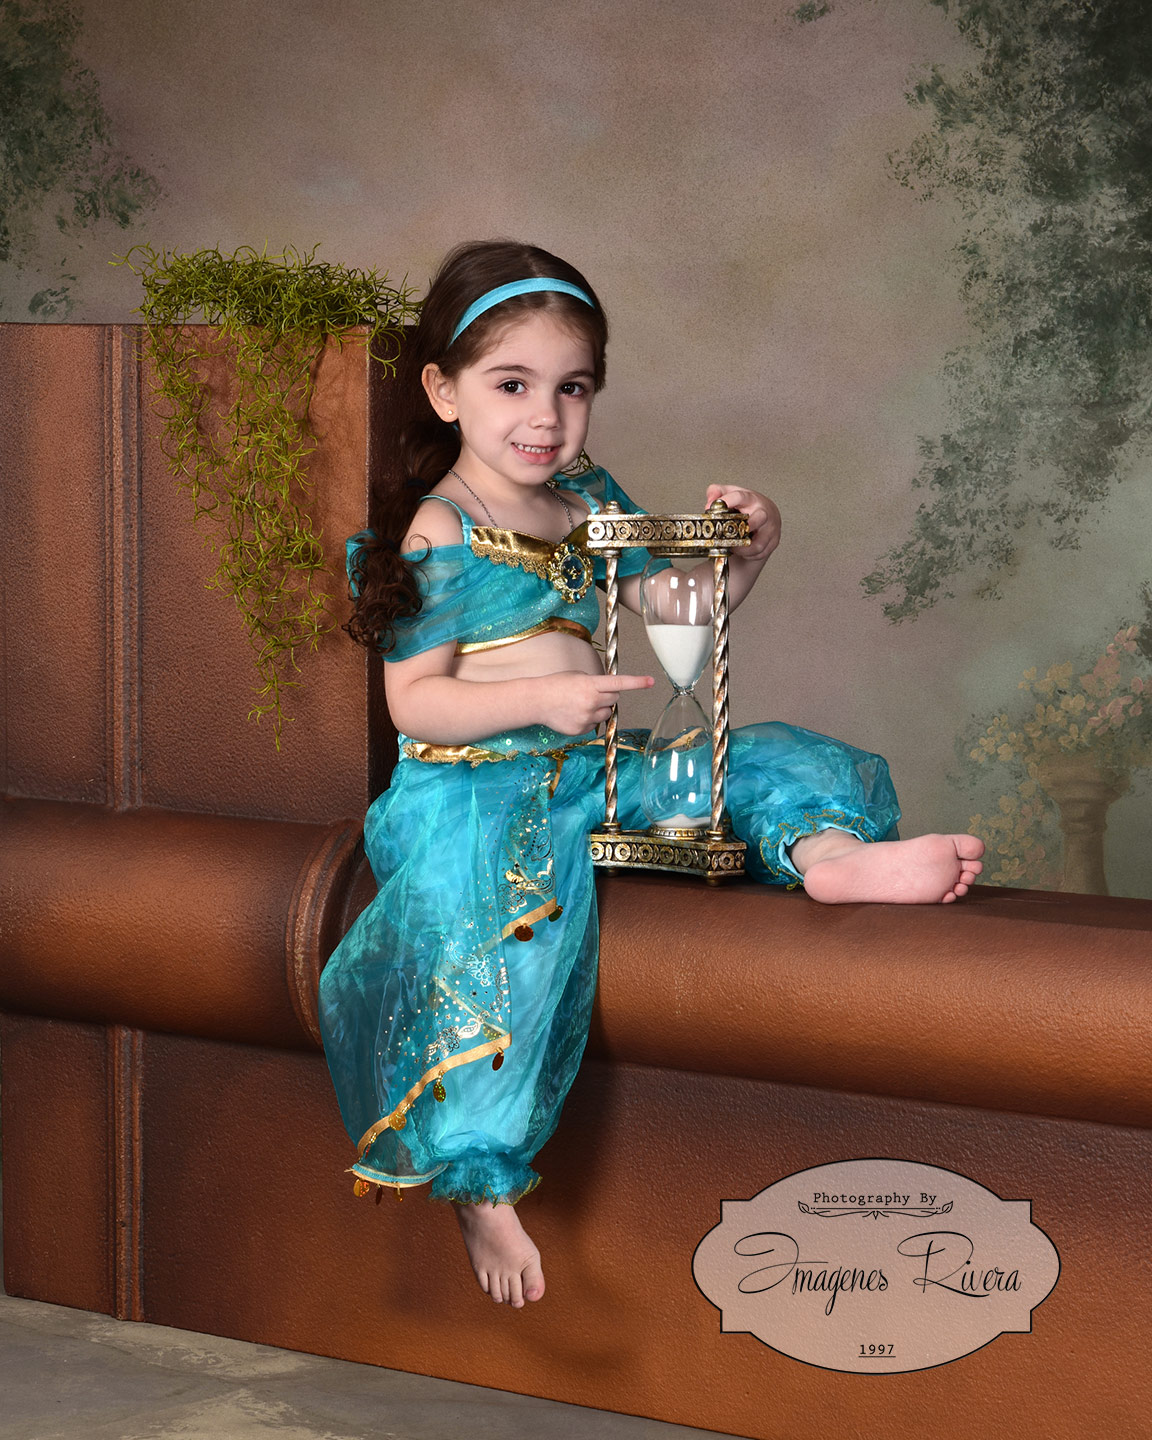 ♥ Little princess mini | Children photographer Imagenes Rivera ♥